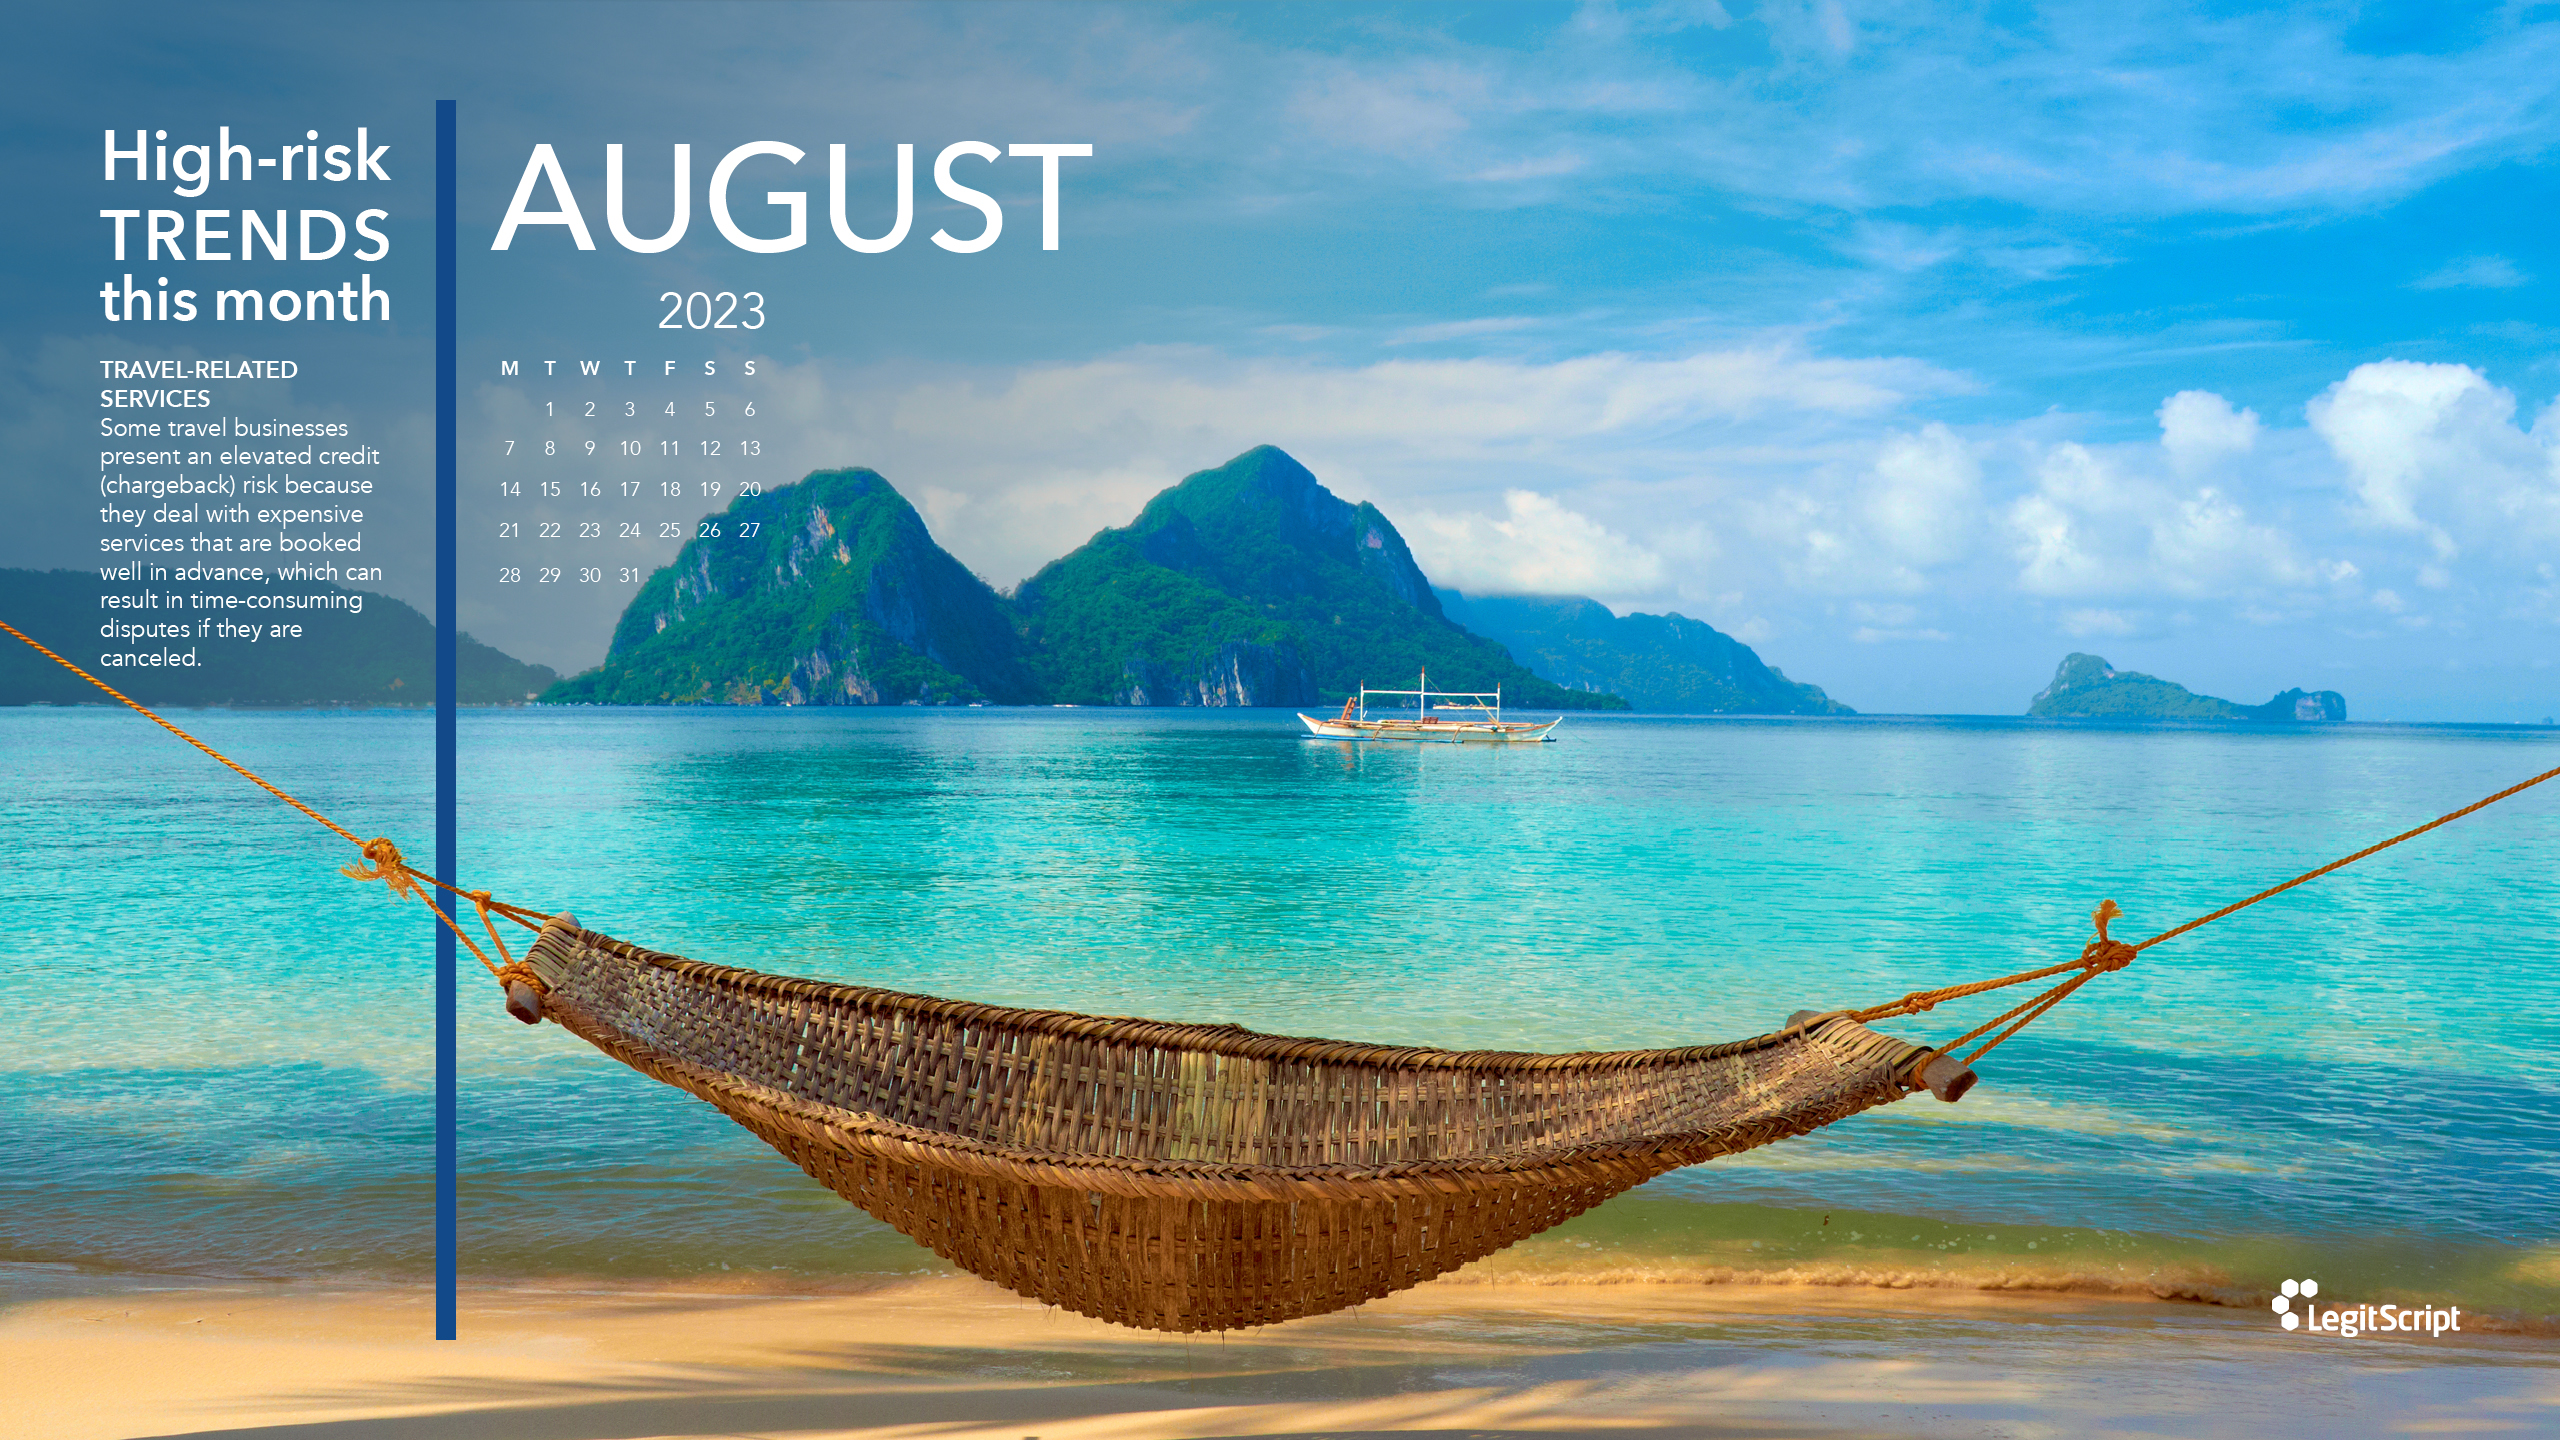 Seasonal High Risk Trends desktop background for August 2.